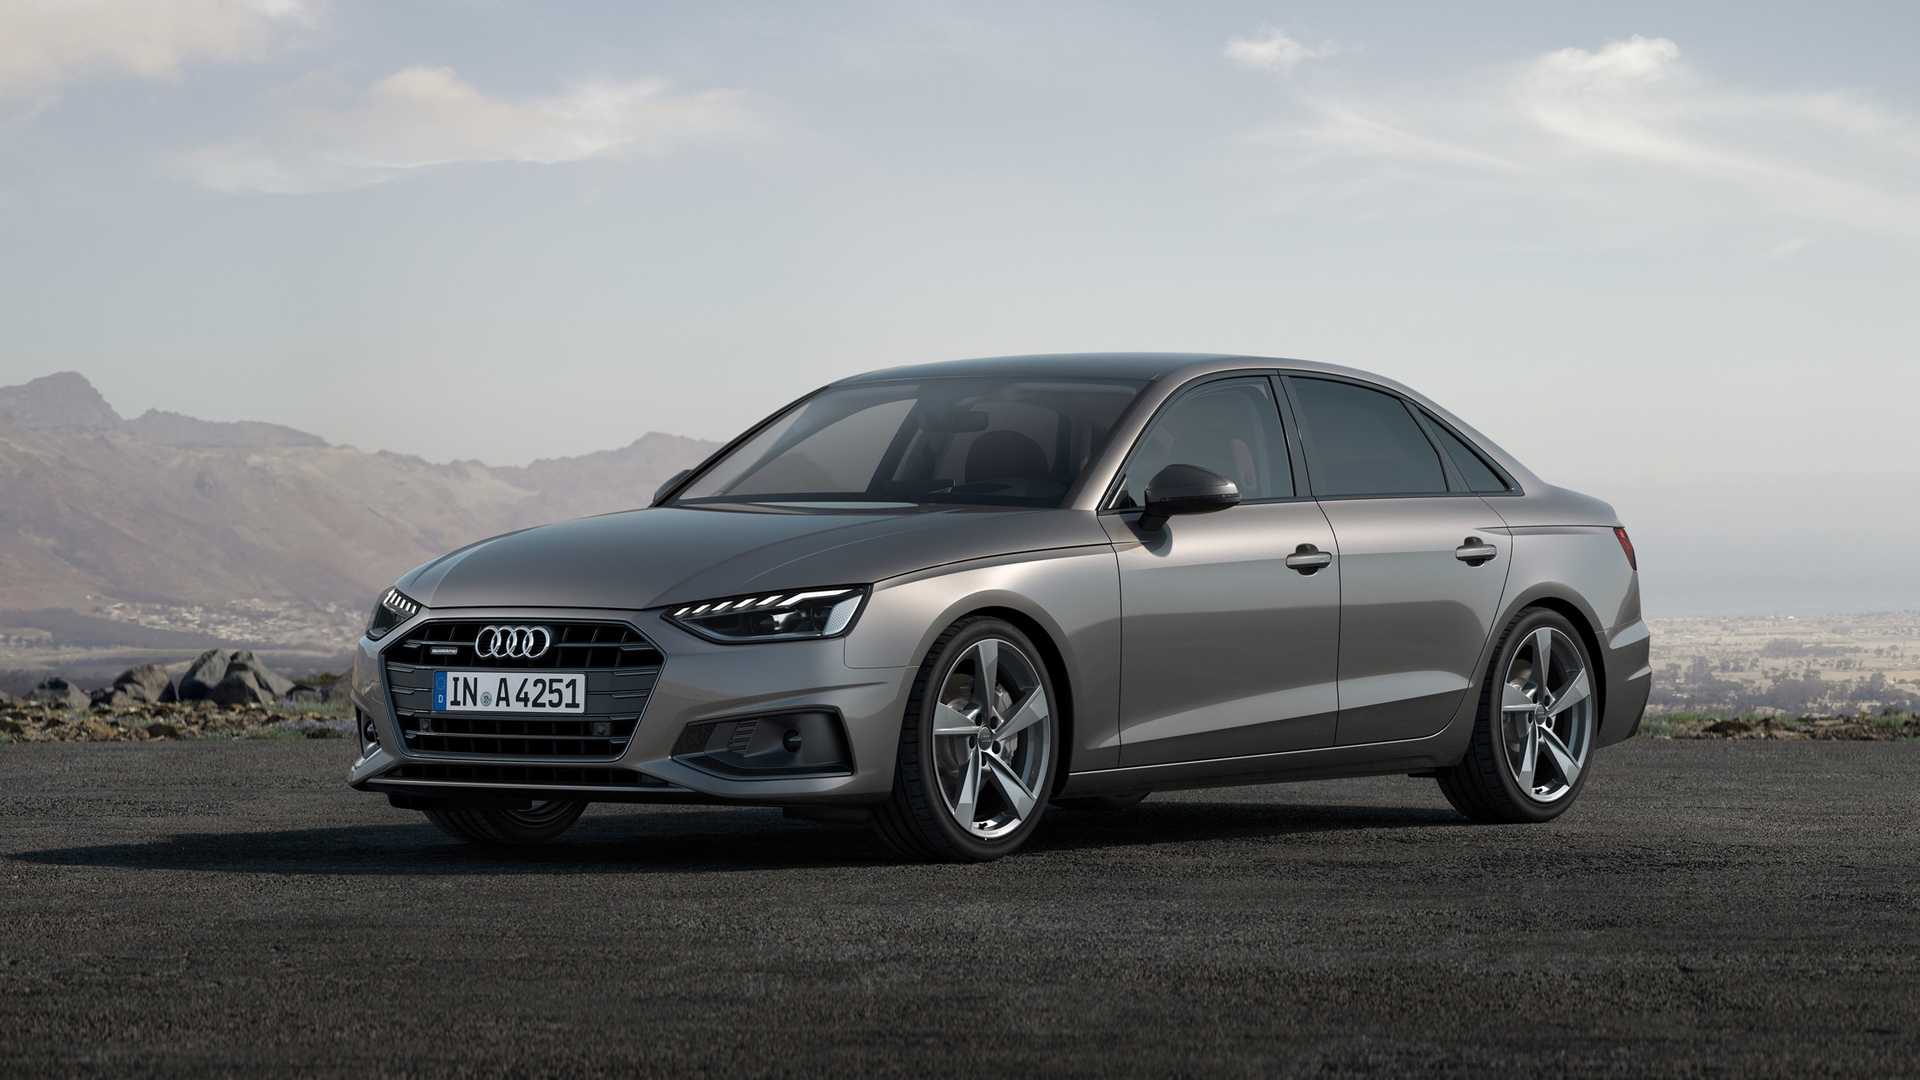 Audi A4 за 2020 година / ФОТО